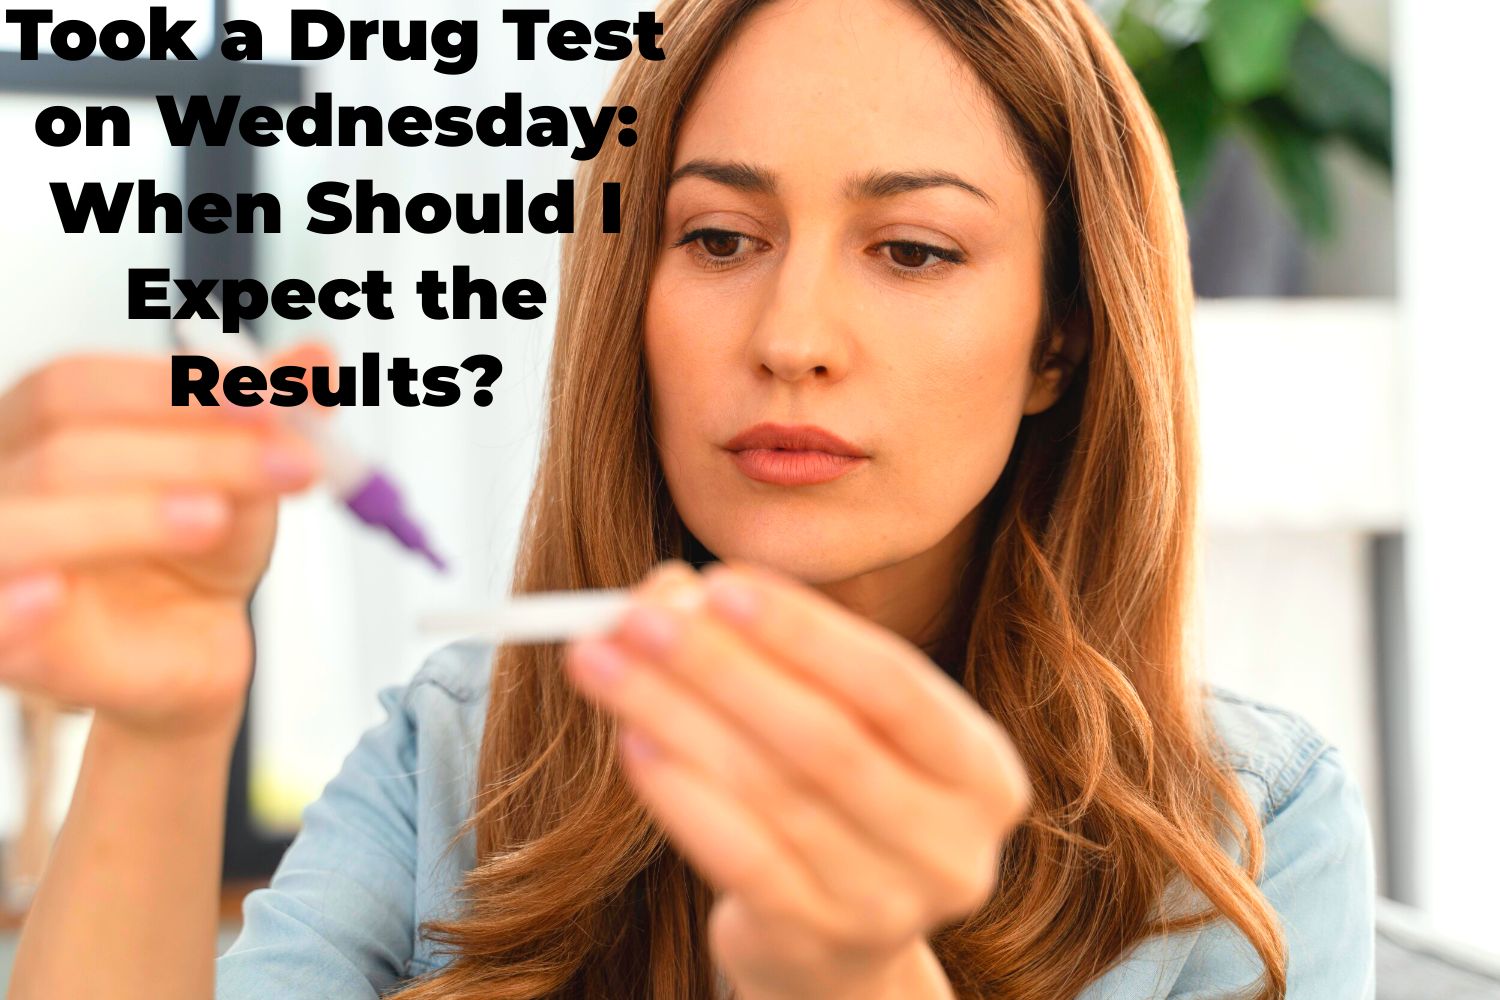 Took a Drug Test on Wednesday